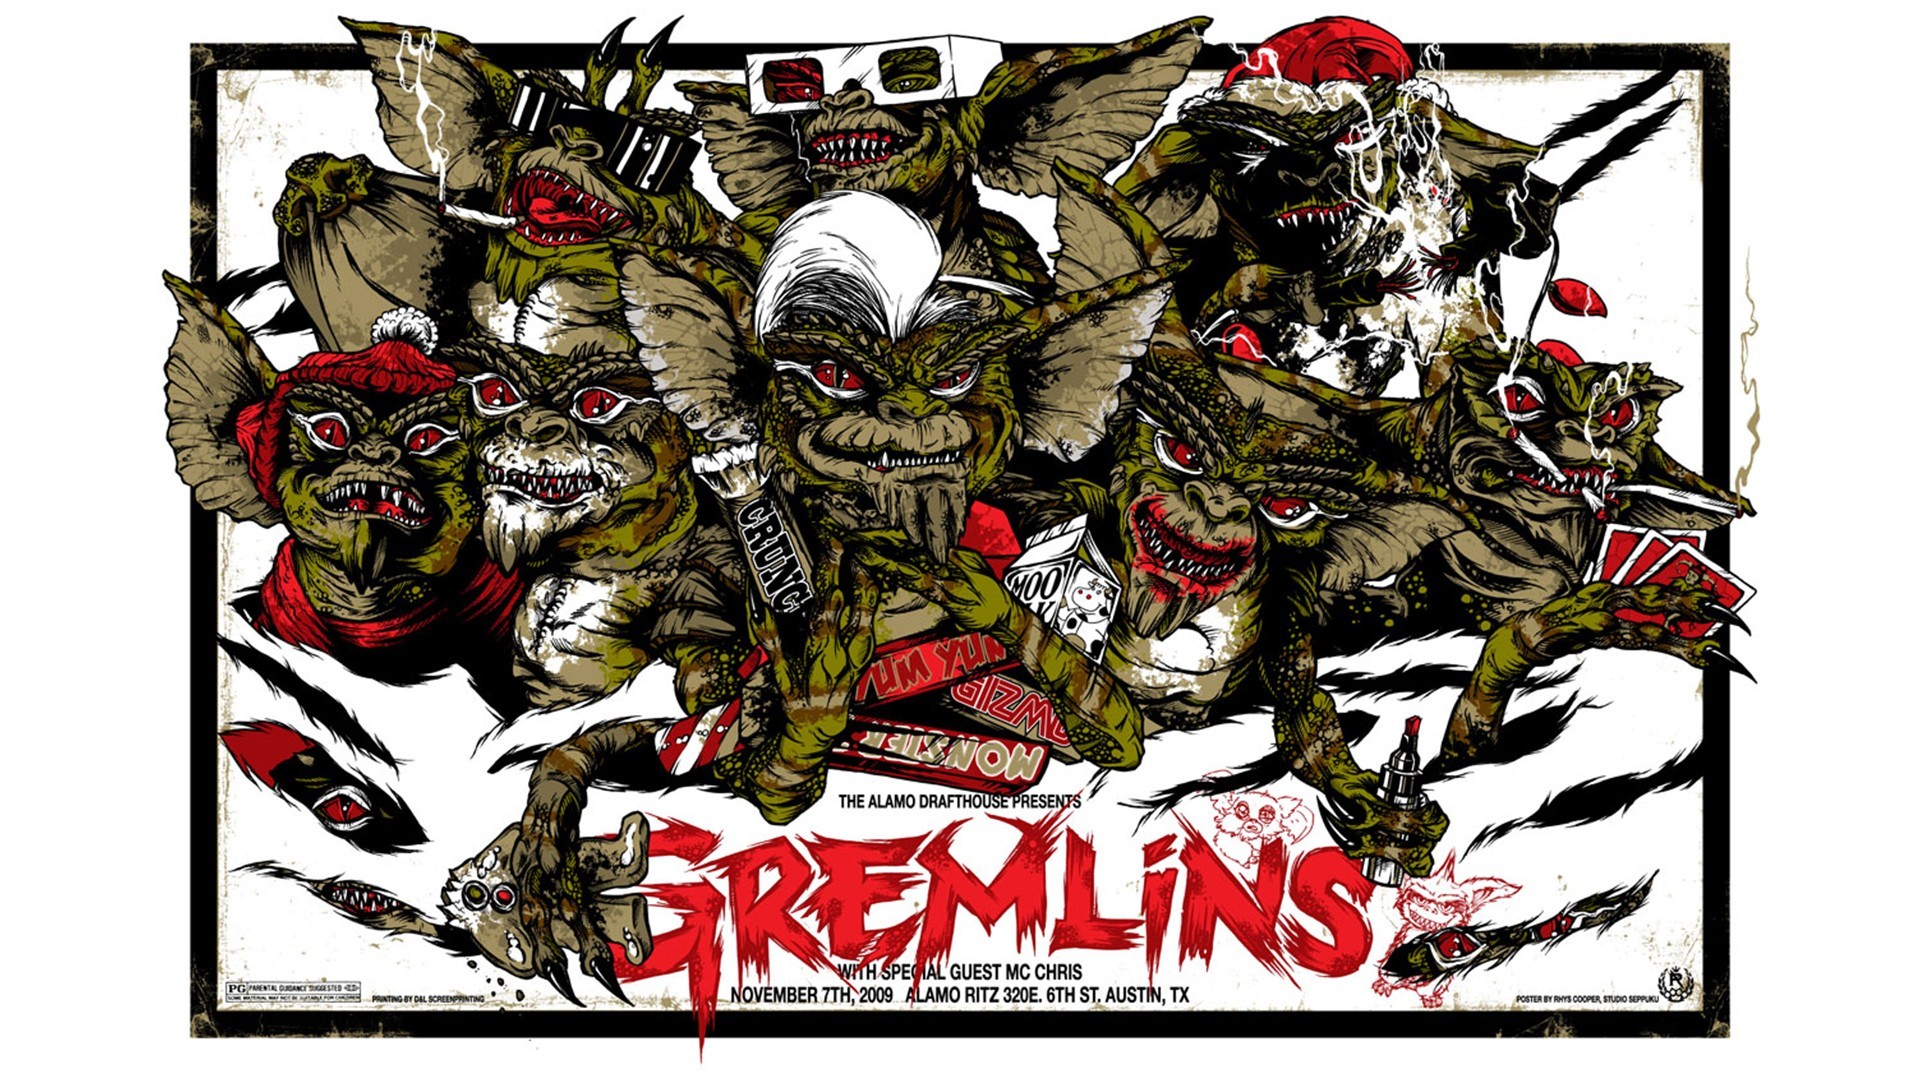 General 1920x1080 Gremlins digital art movies movie poster